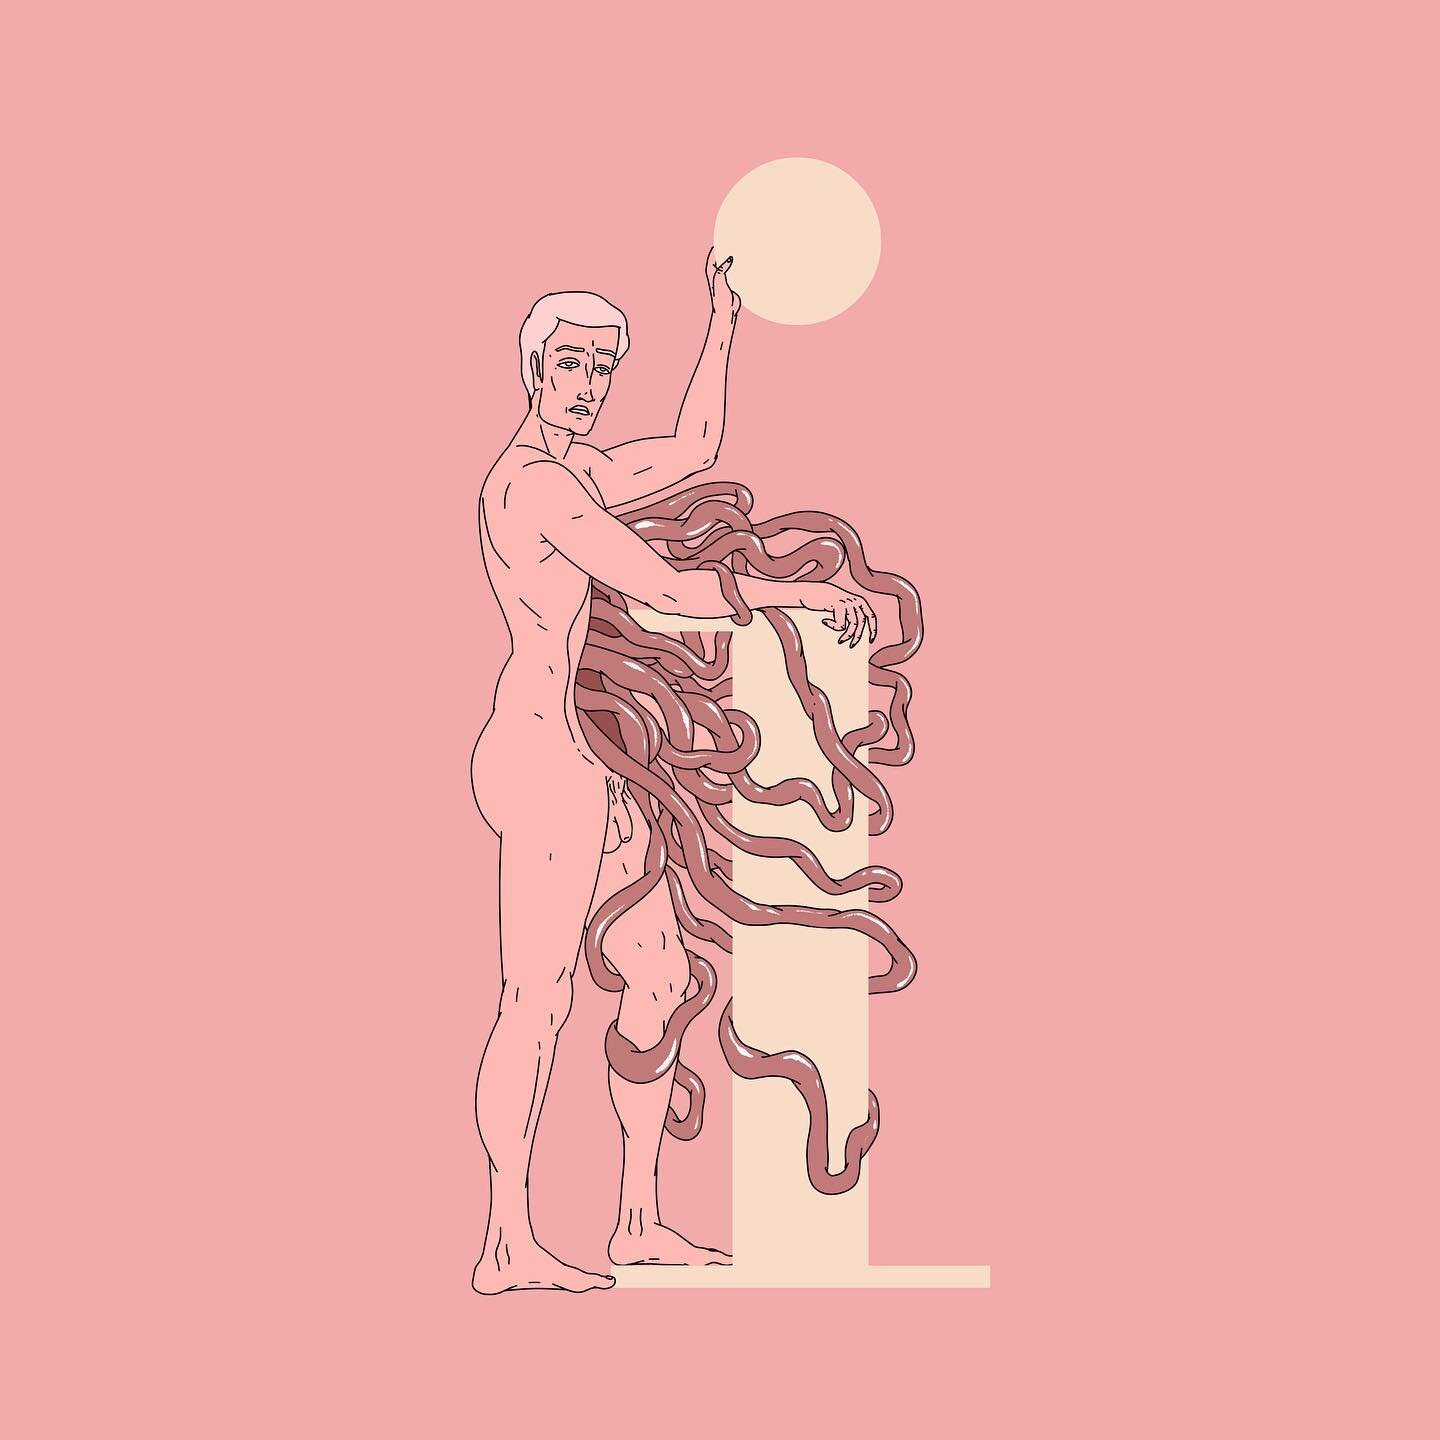 i
.
.
.
#illustration #drawing #procreate #typography #didot #peenie #disemboweled #intestines #gore